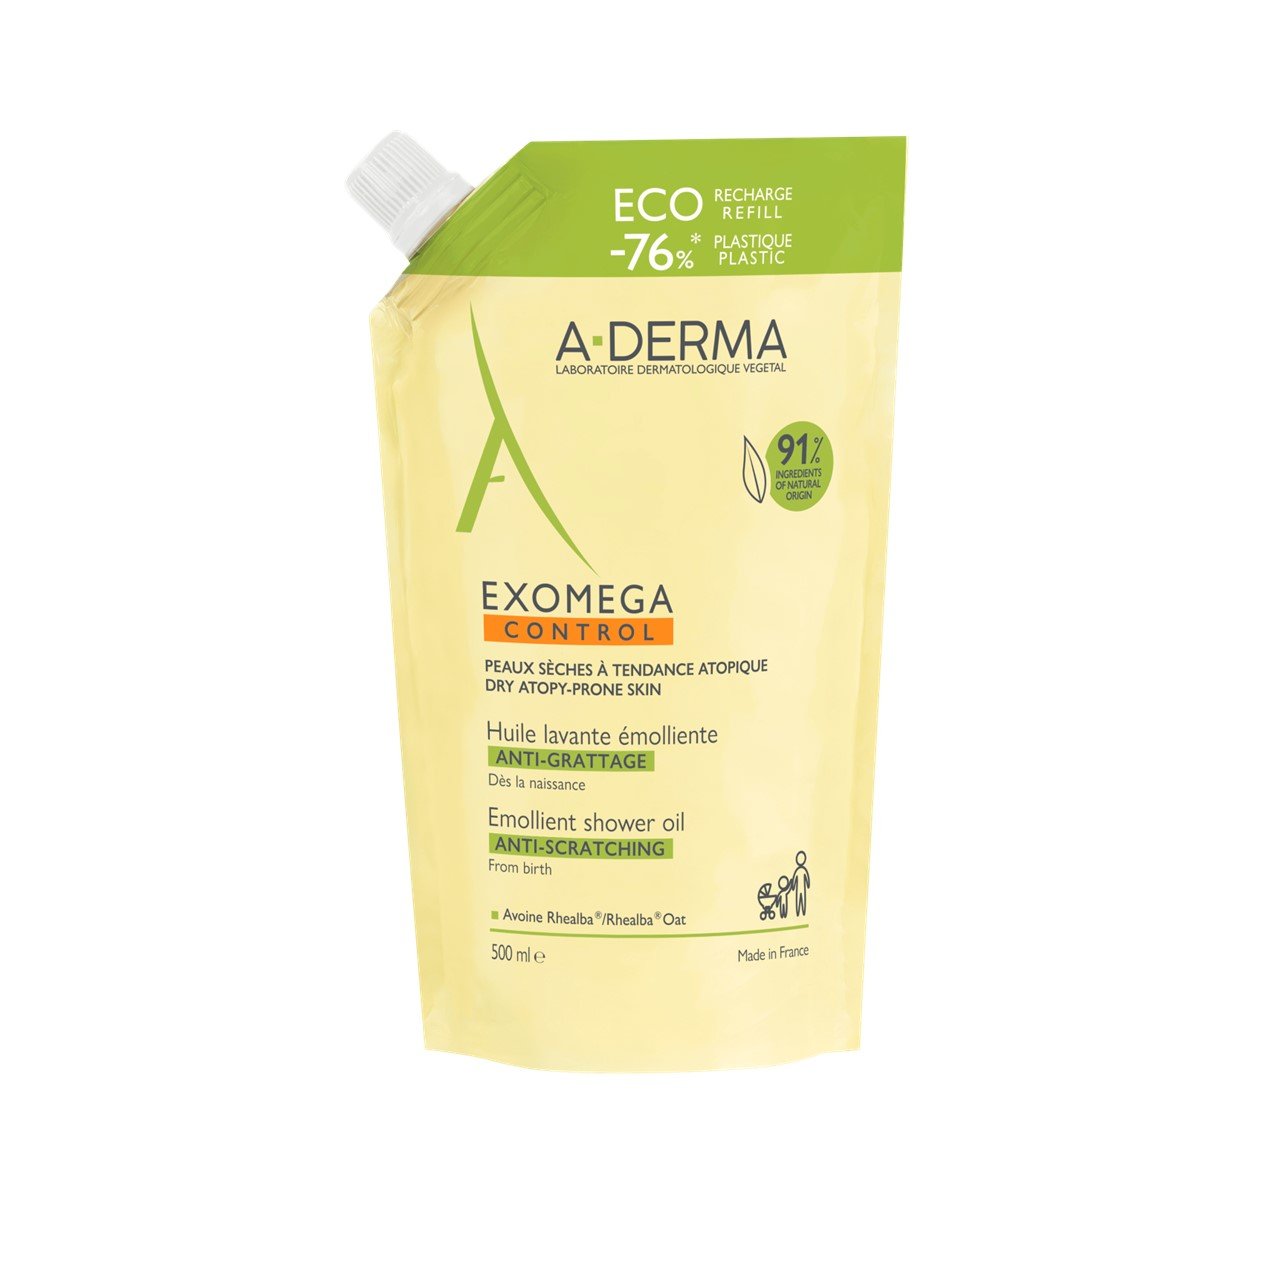 A-Derma Exomega Control Emollient Shower Oil Refill 500ml (16.9 fl oz)